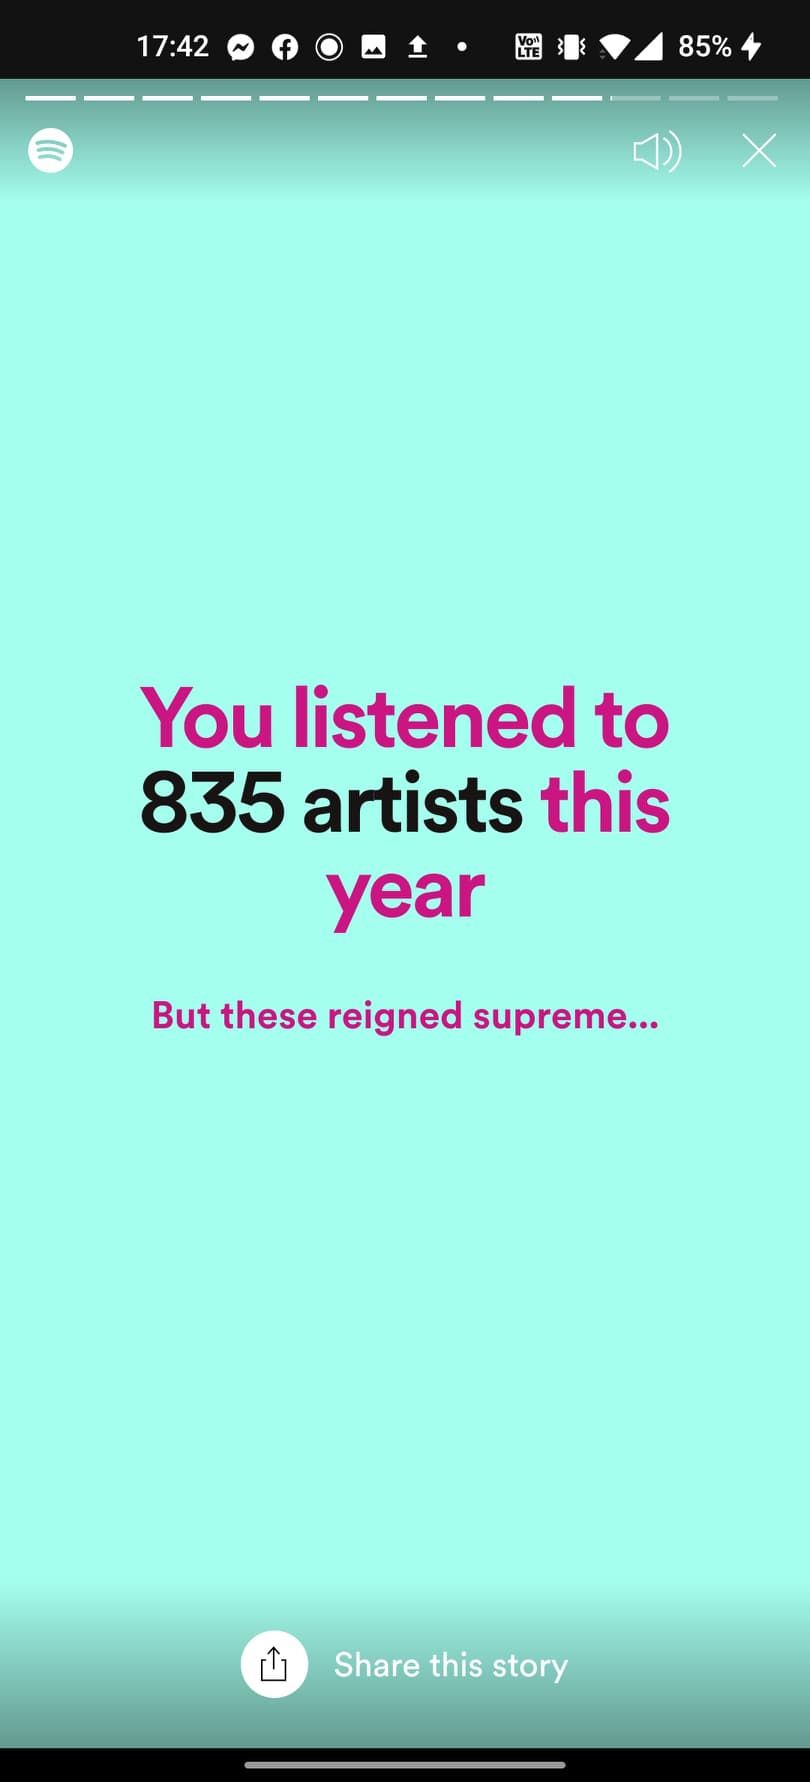 Spotify Wrapped มาแล้ว ~ เผยตัวเลขสถิติเพลงที่ฟังไปเยอะที่สุด รวมถึงศิลปินที่ชื่นชอบ ตลอดทั้งปี 2020